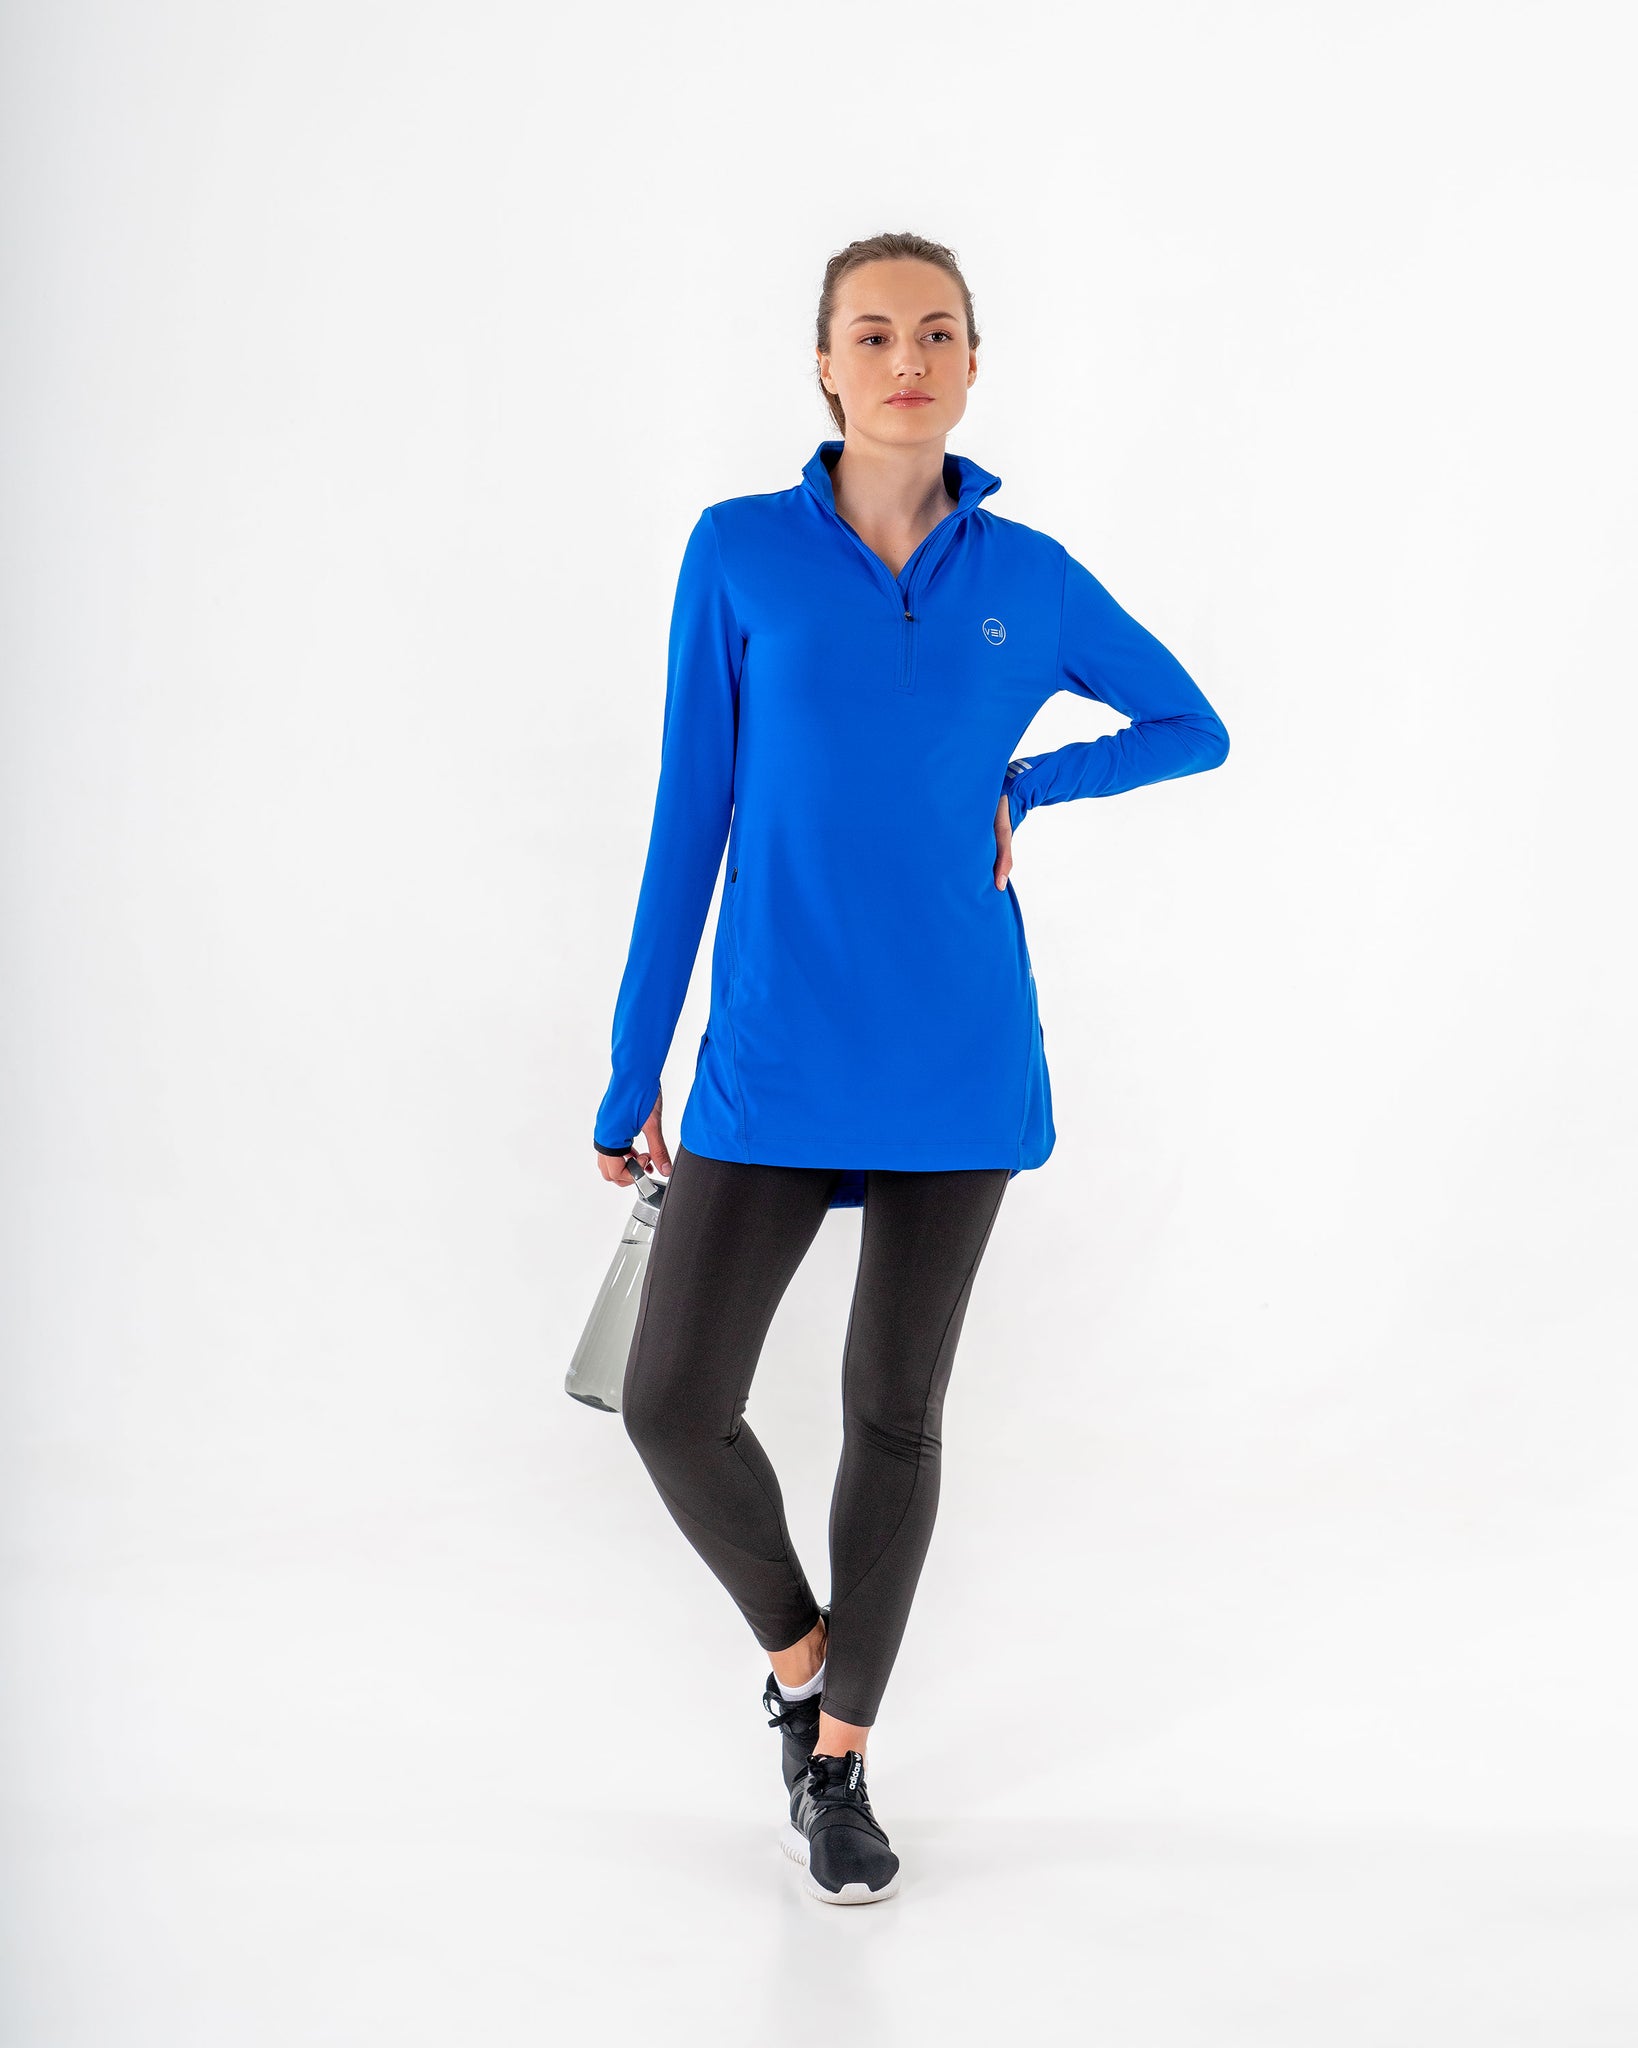 Veil Spark Half-Zip - Shop Modest Activewear and Apparel